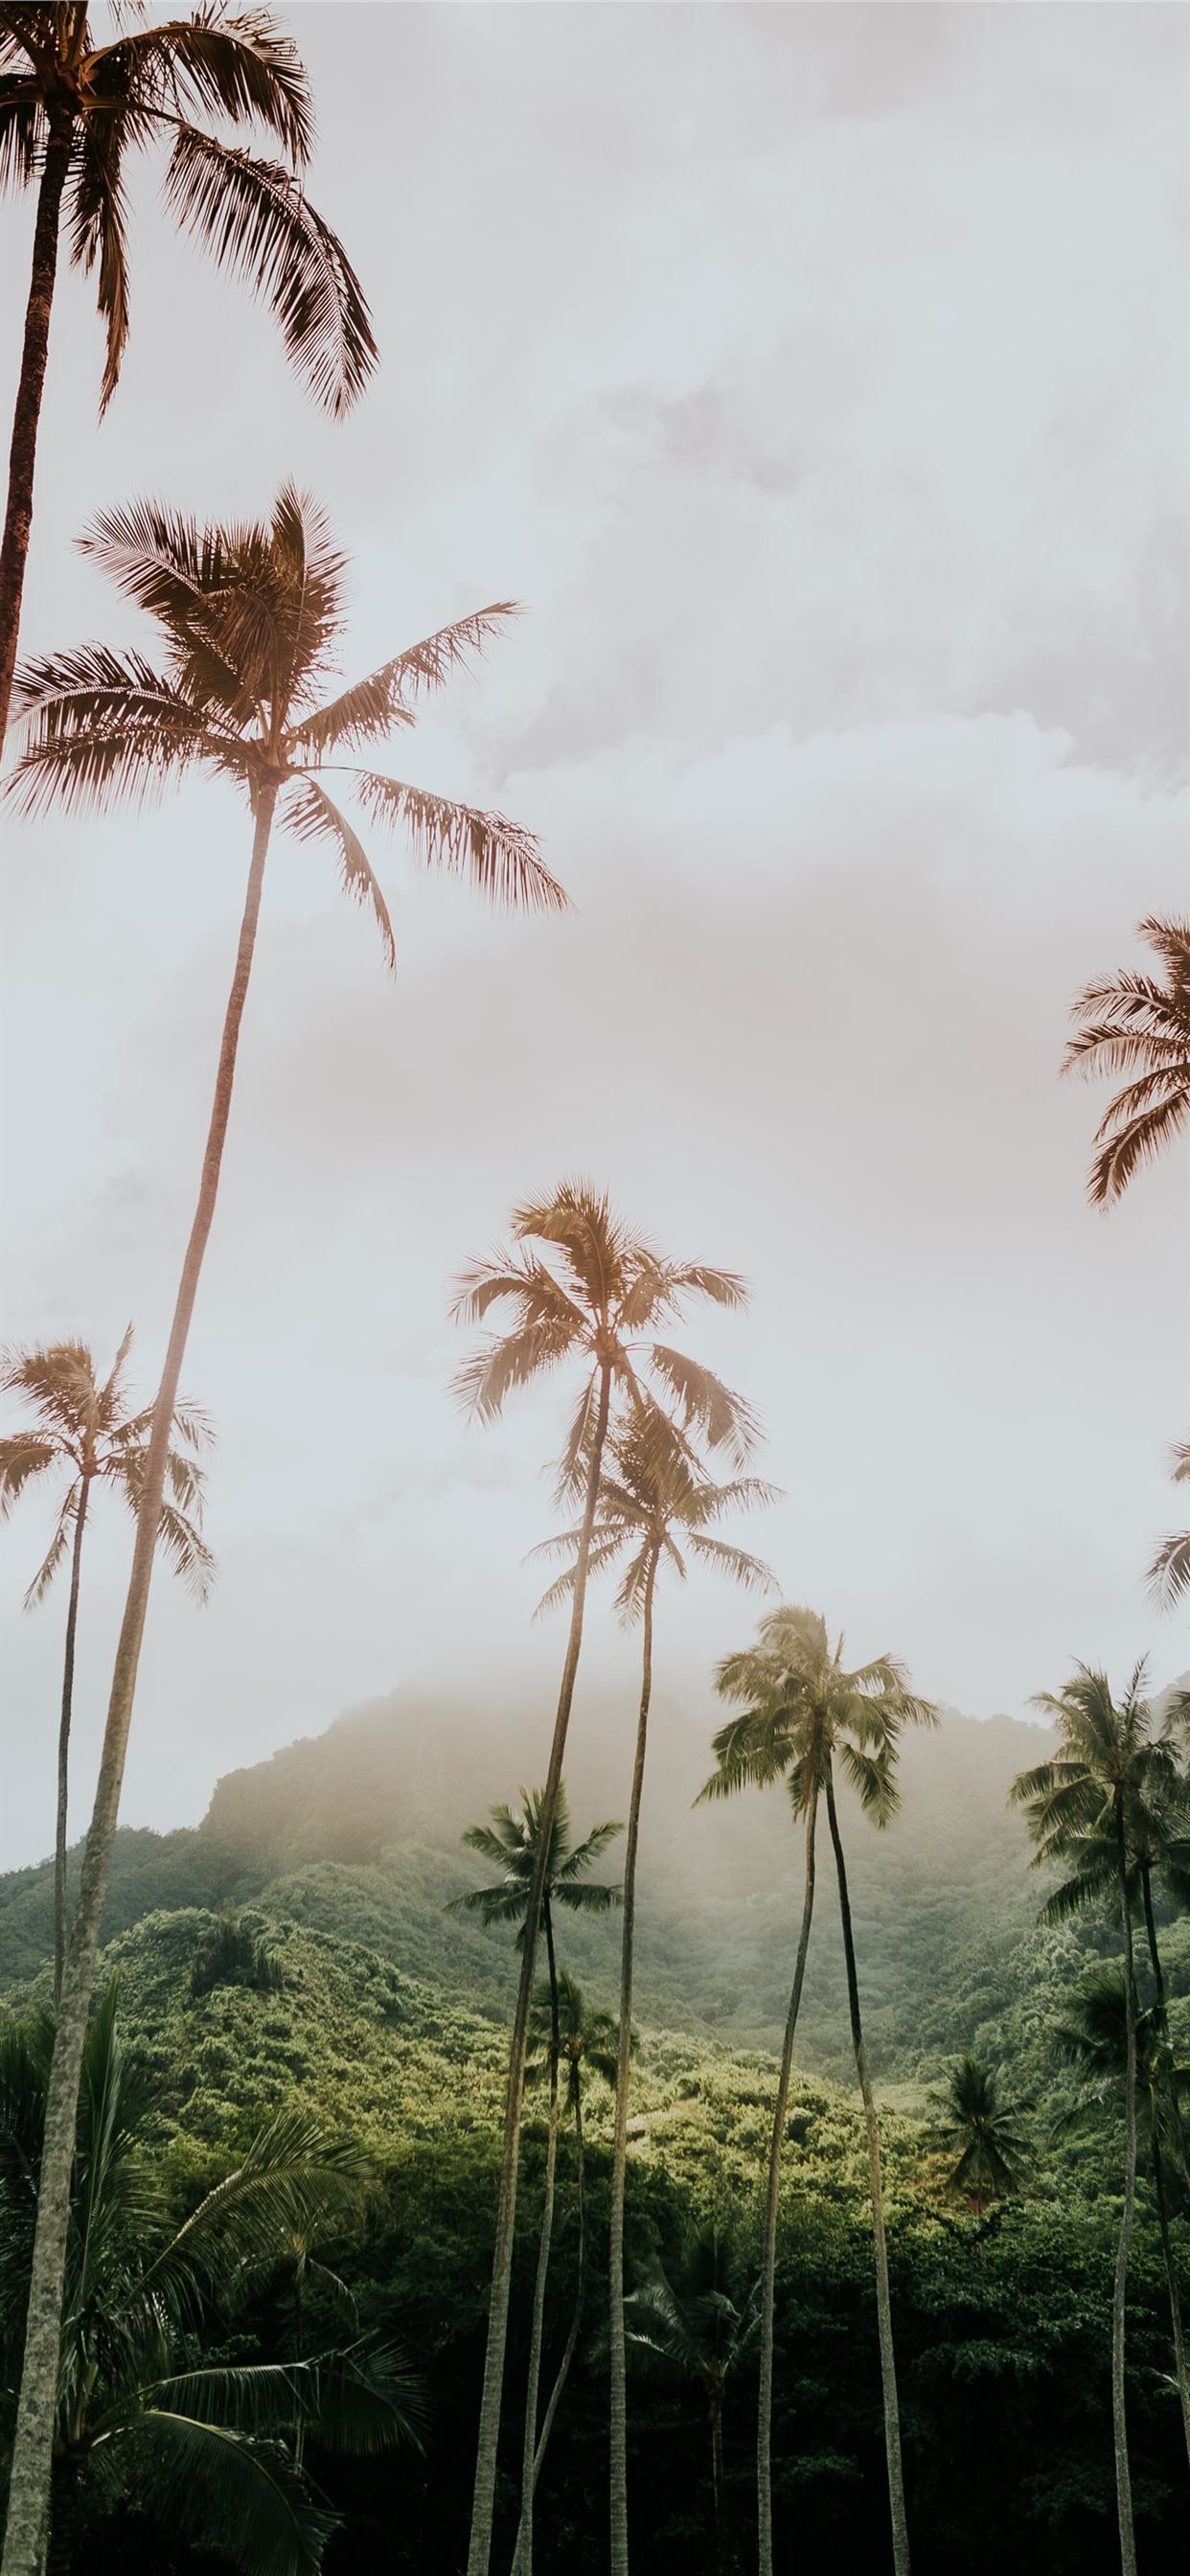 A photo of palm trees on a tropical island - Coconut